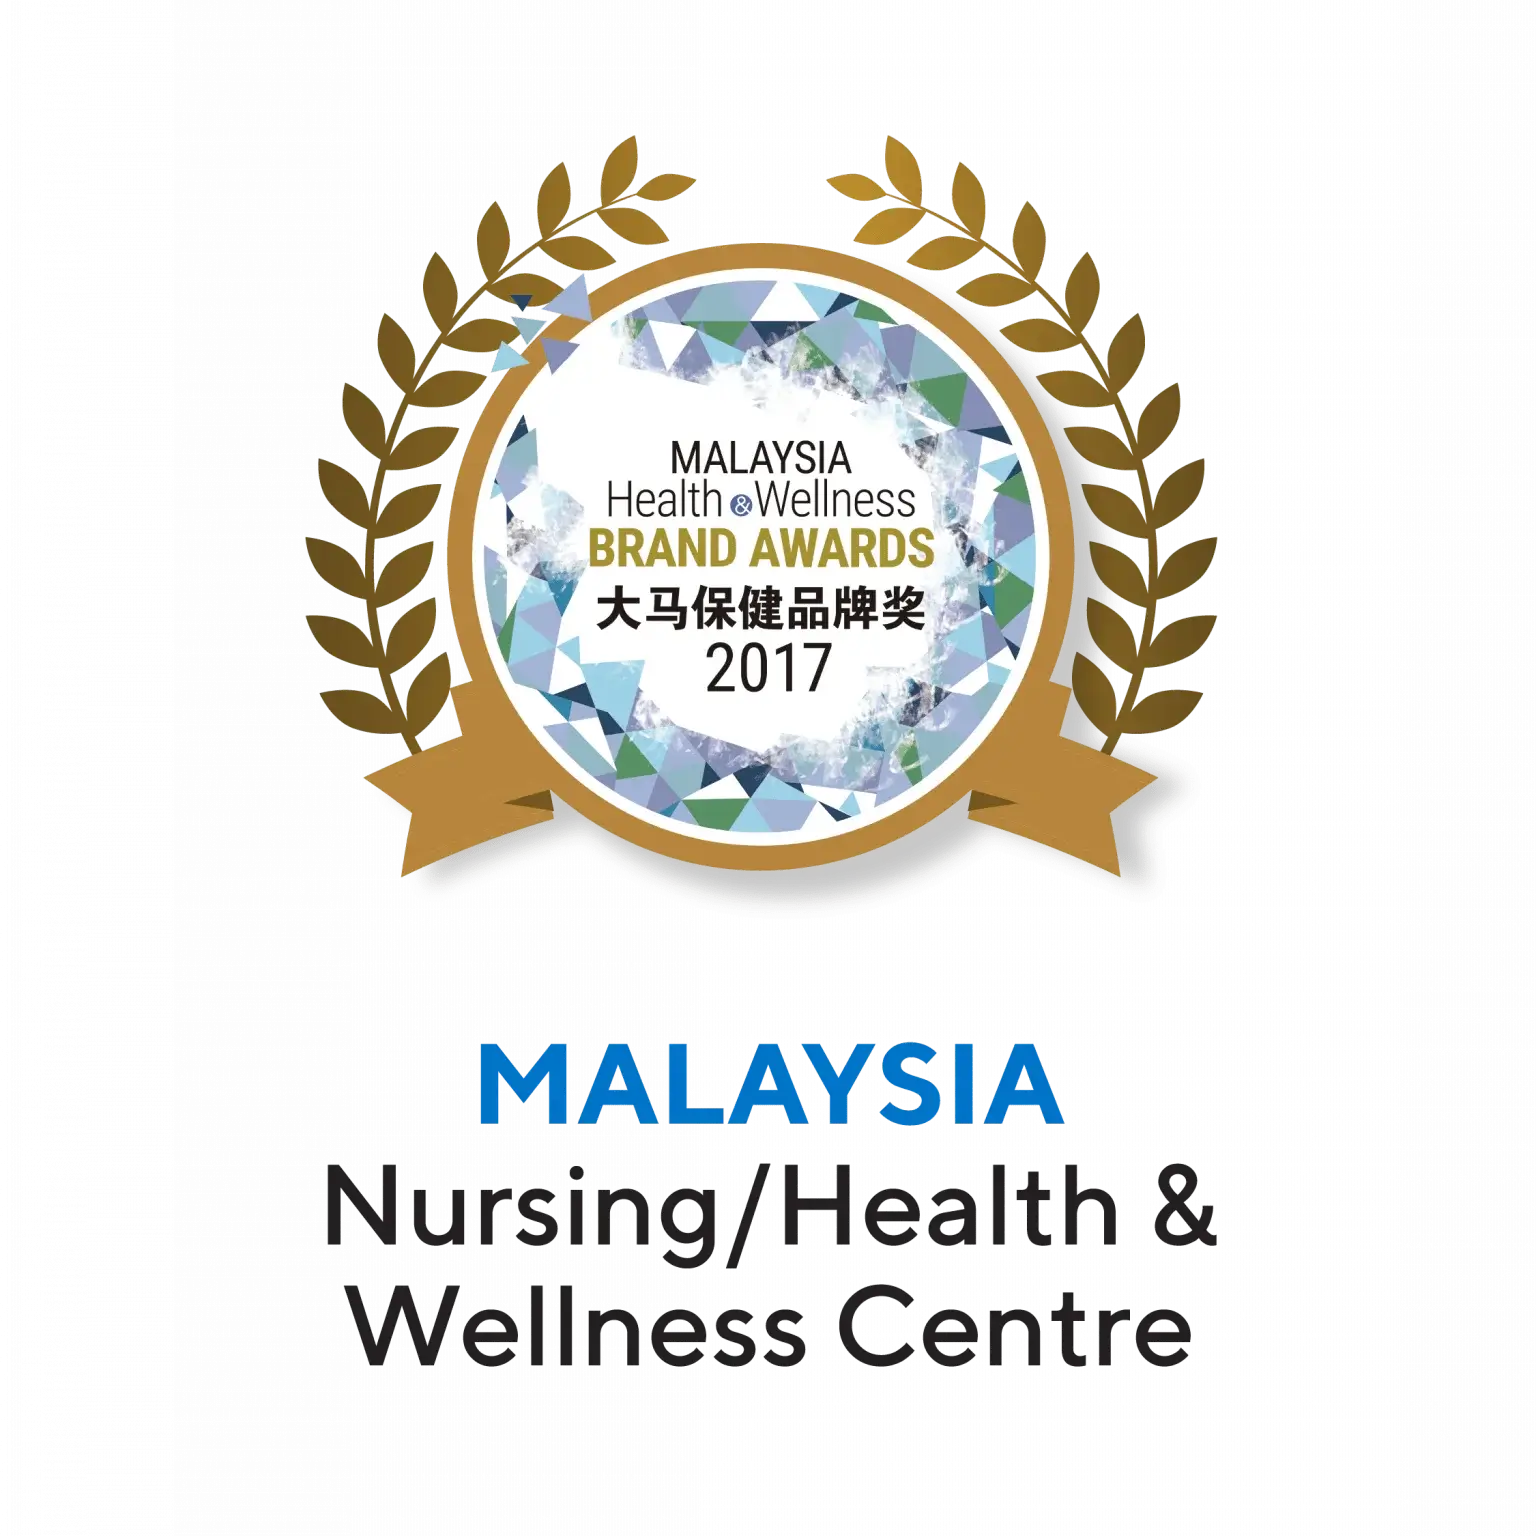 malaysia-nursing-health-and-wellness-centre-awards-beacon-hospital-malaysia